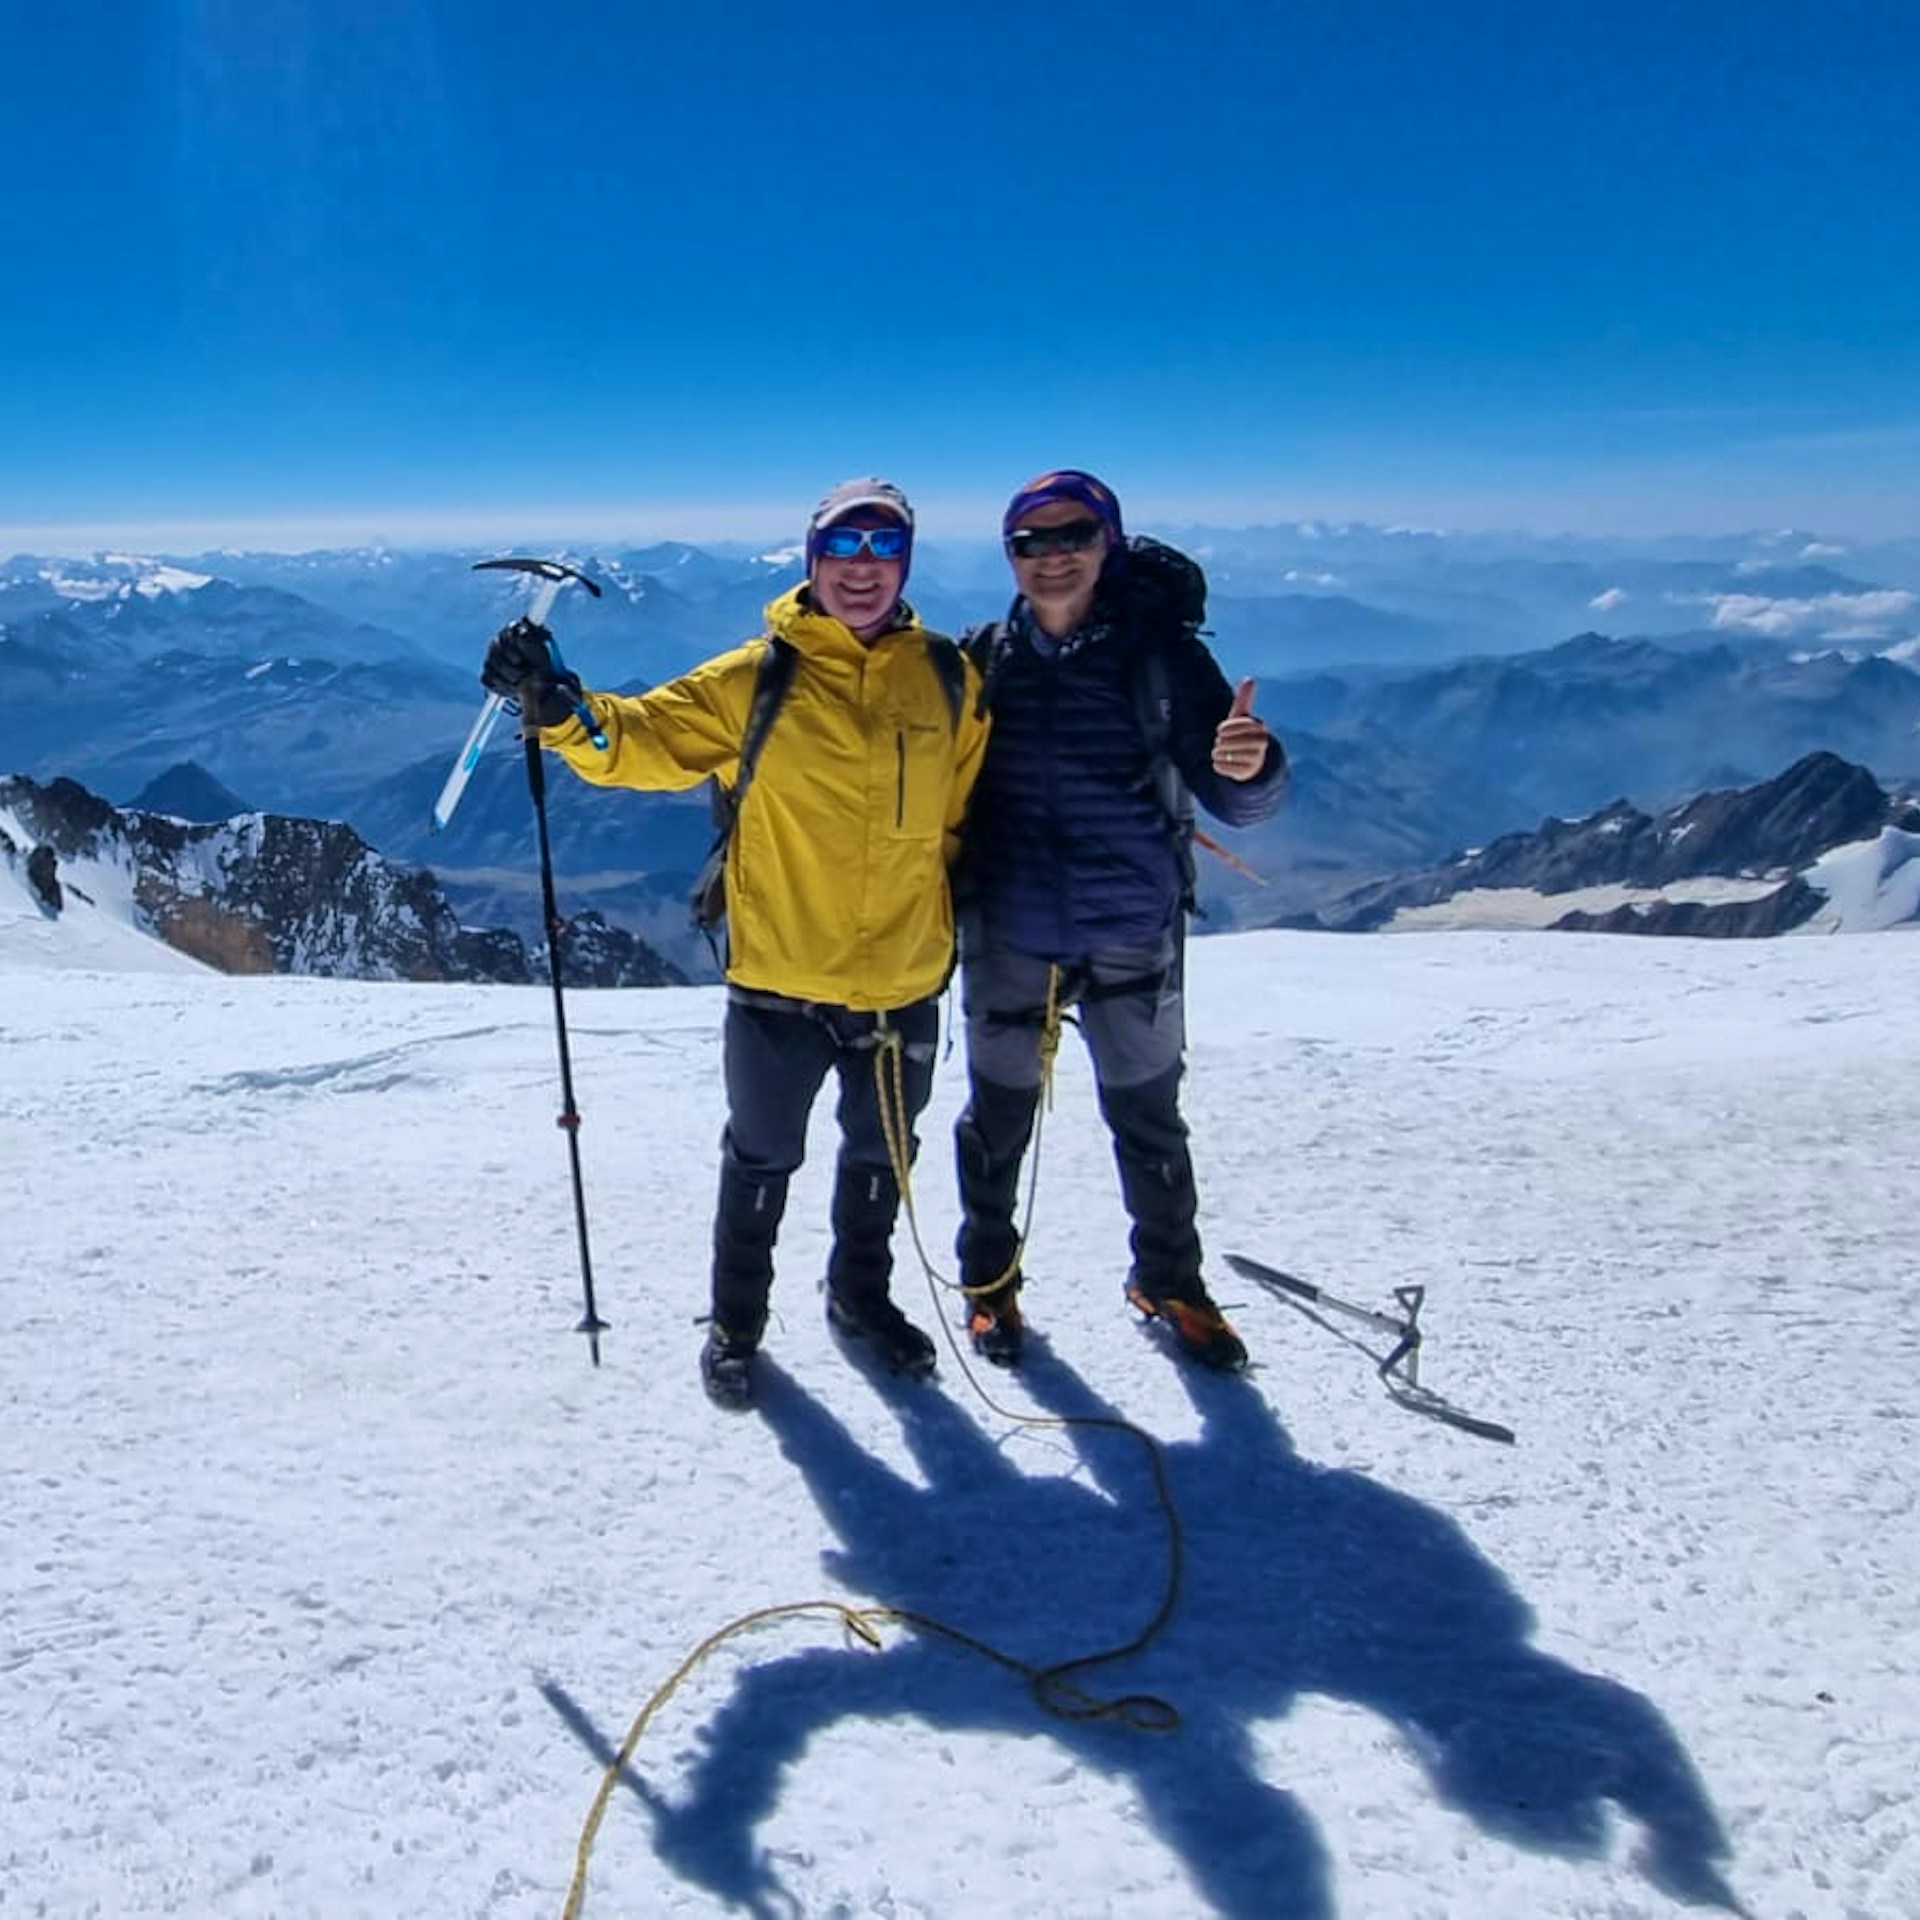 Mont Blanc summit expedition